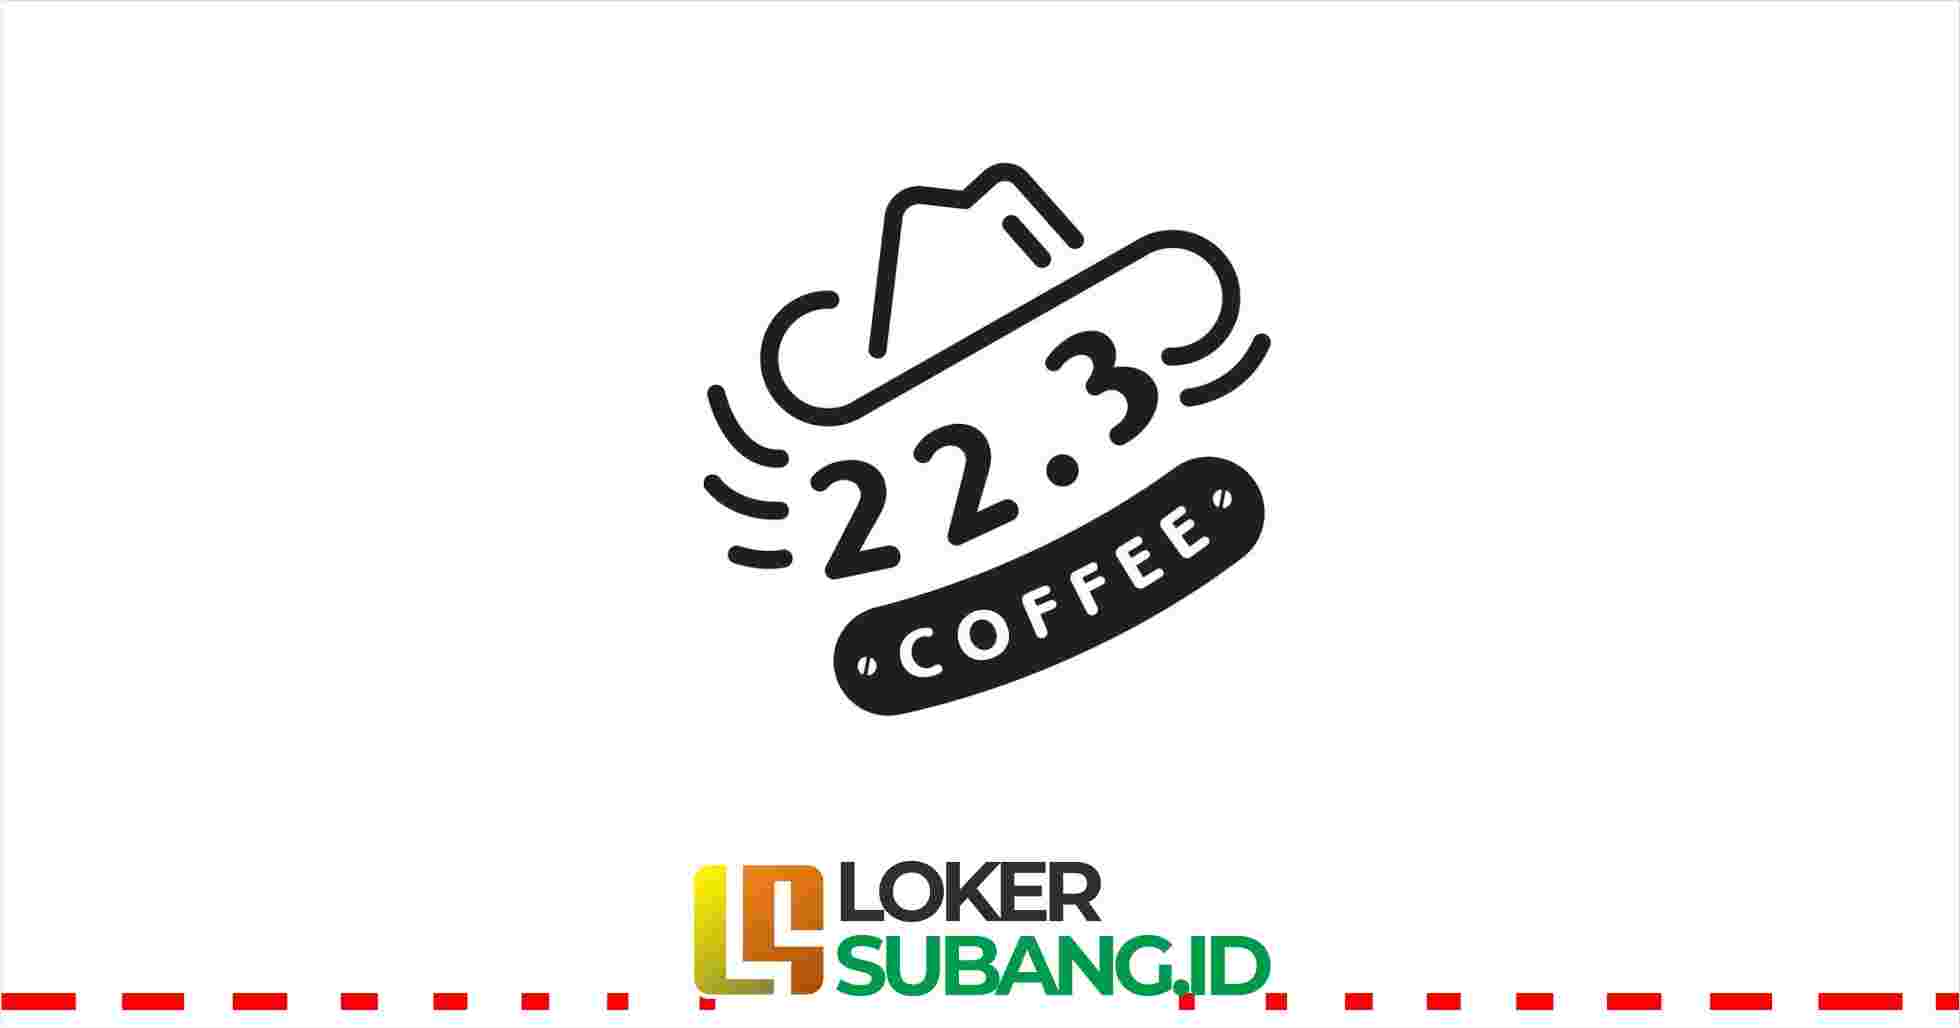 22.3 coffee Subang